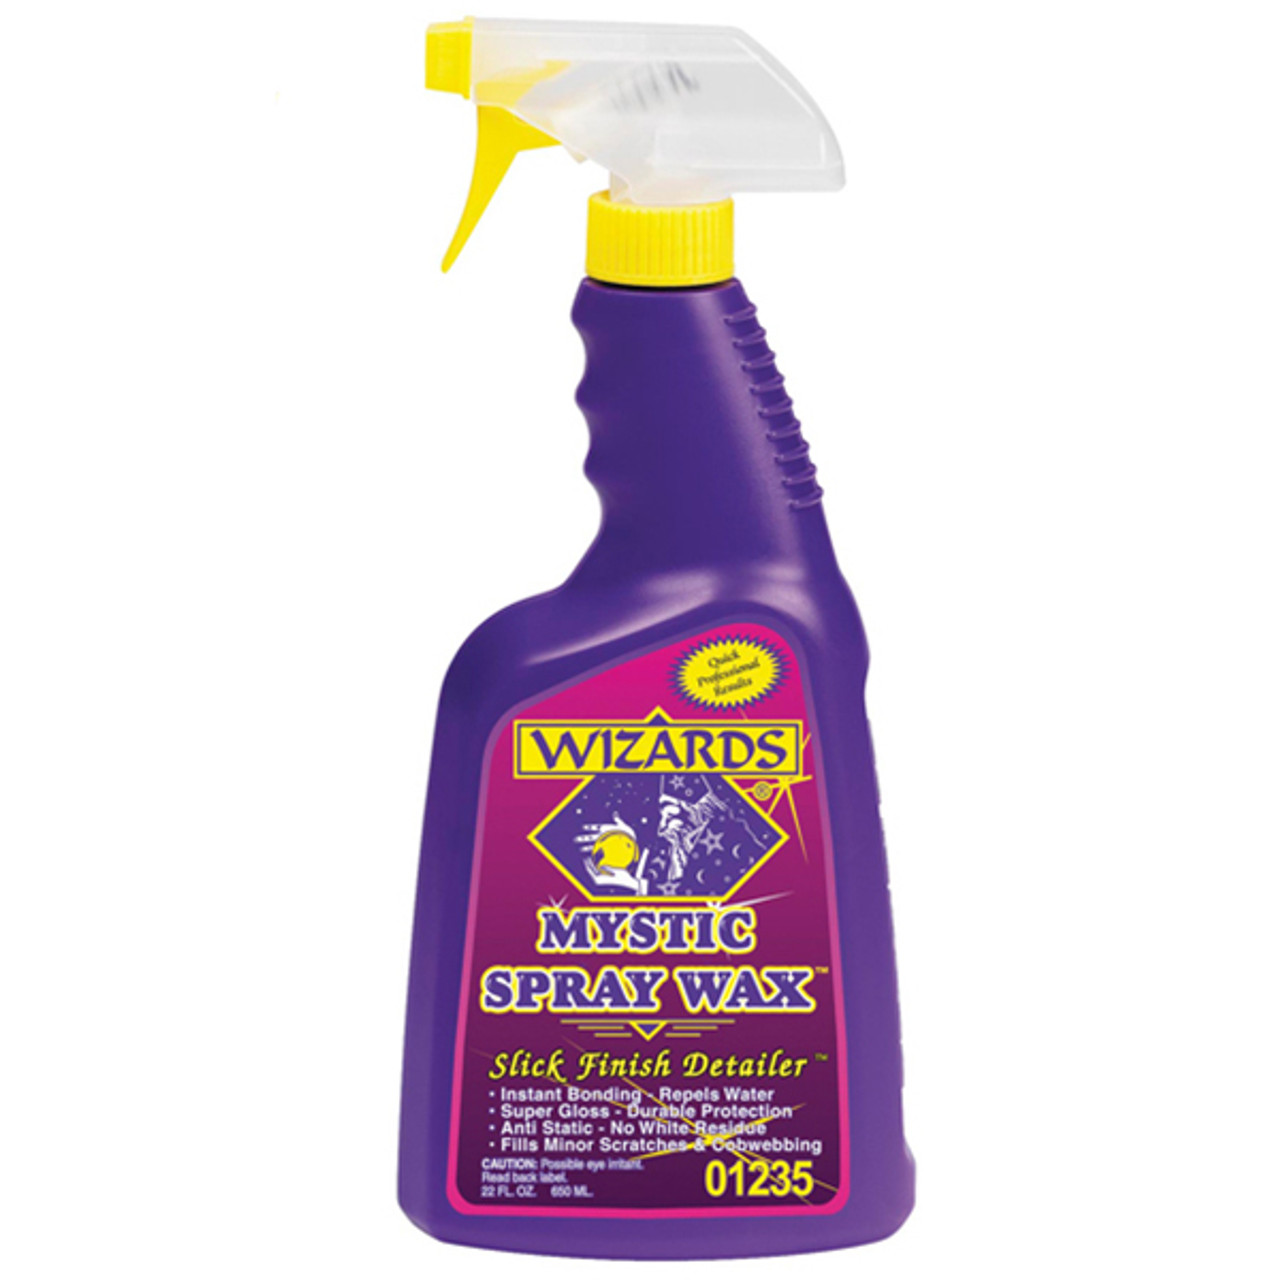 Wizards Mystic Spray Wax Slick Finish Detailer 22 oz